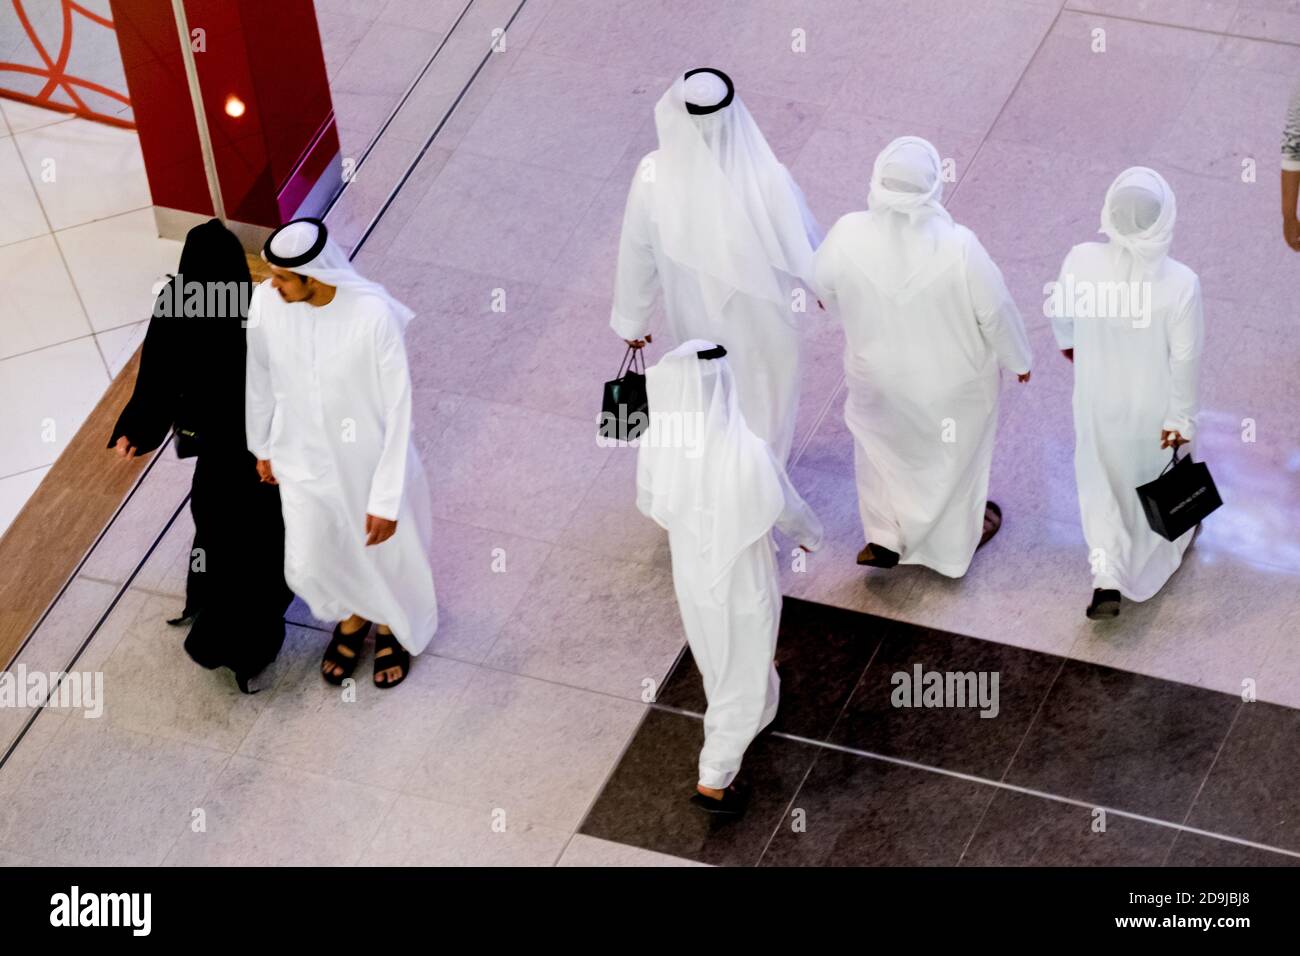 Emirates people Stock Photo